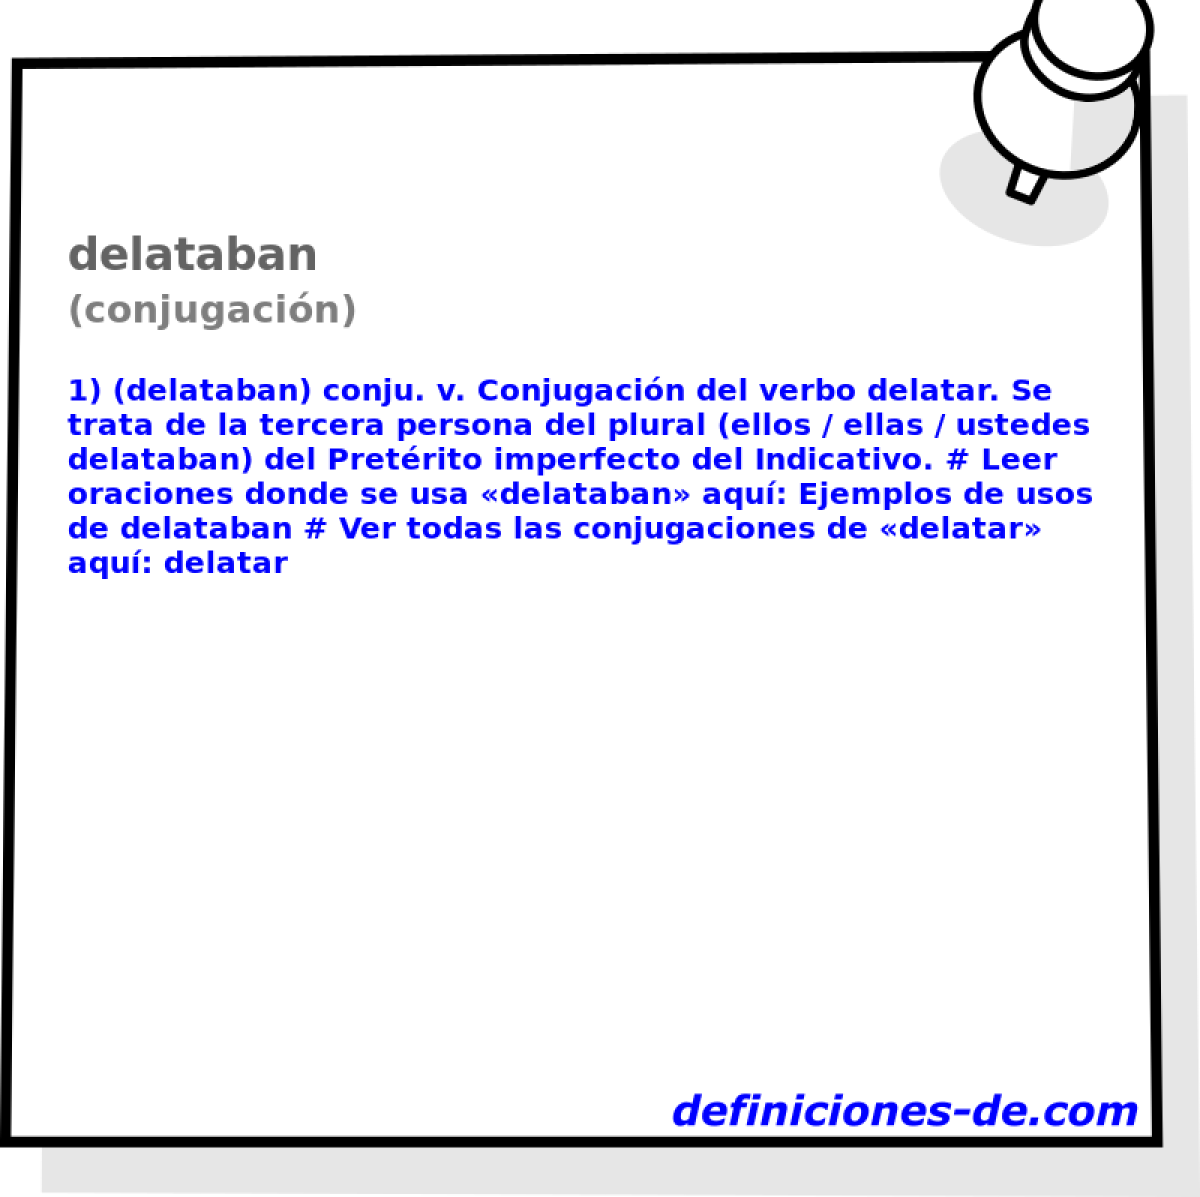 delataban (conjugacin)